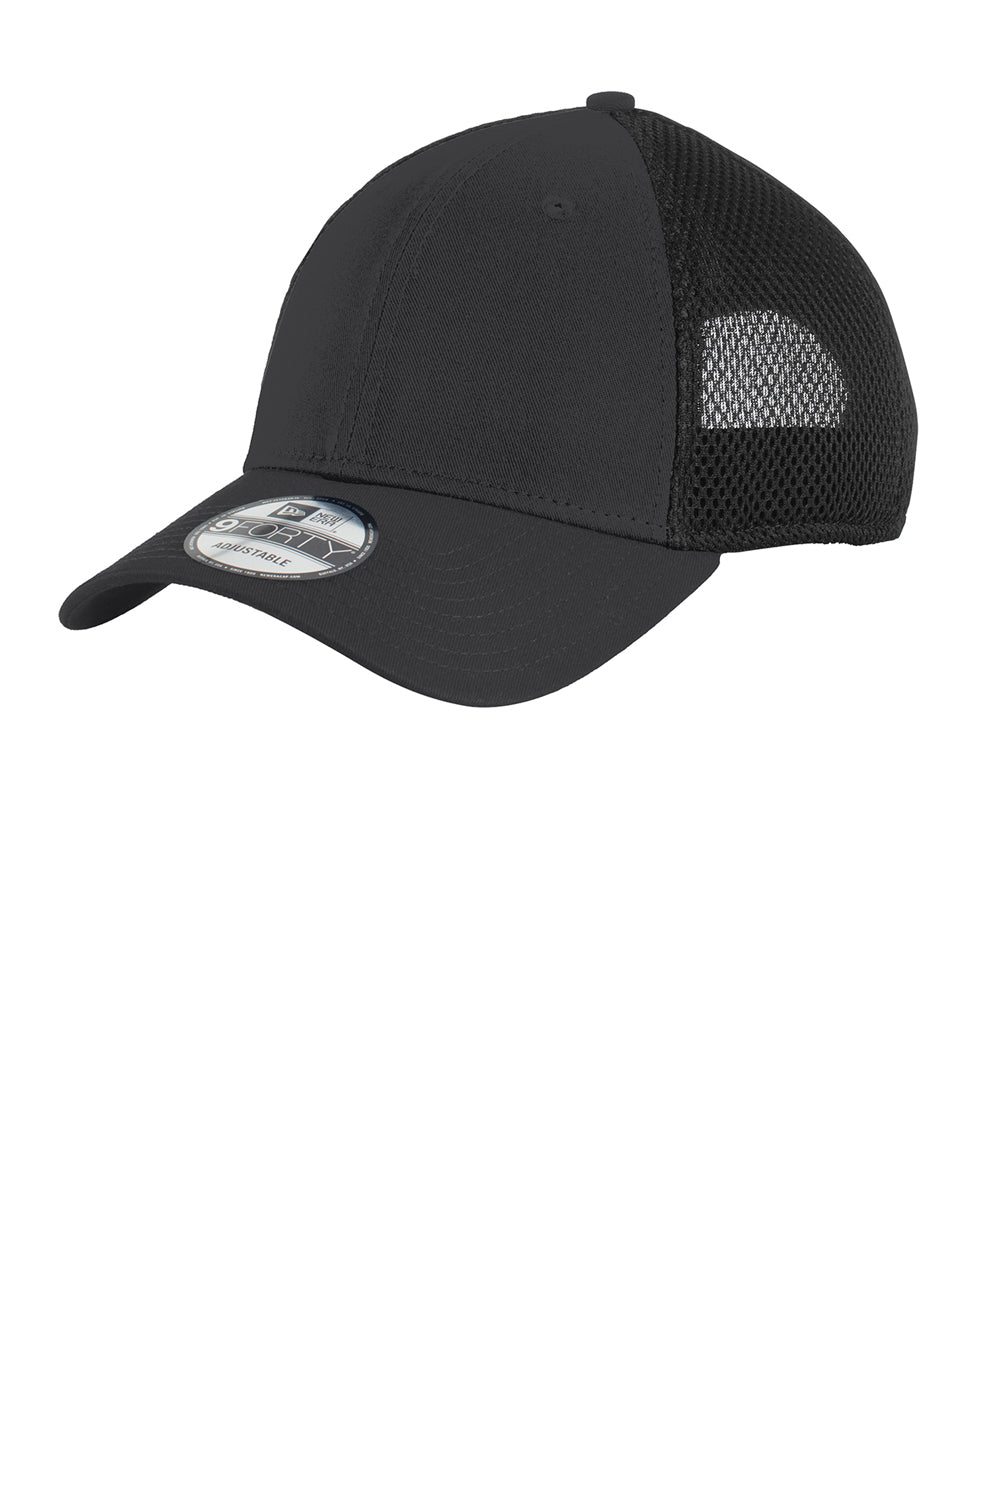 New Era NE204 Mens Adjustable Hat Black Front